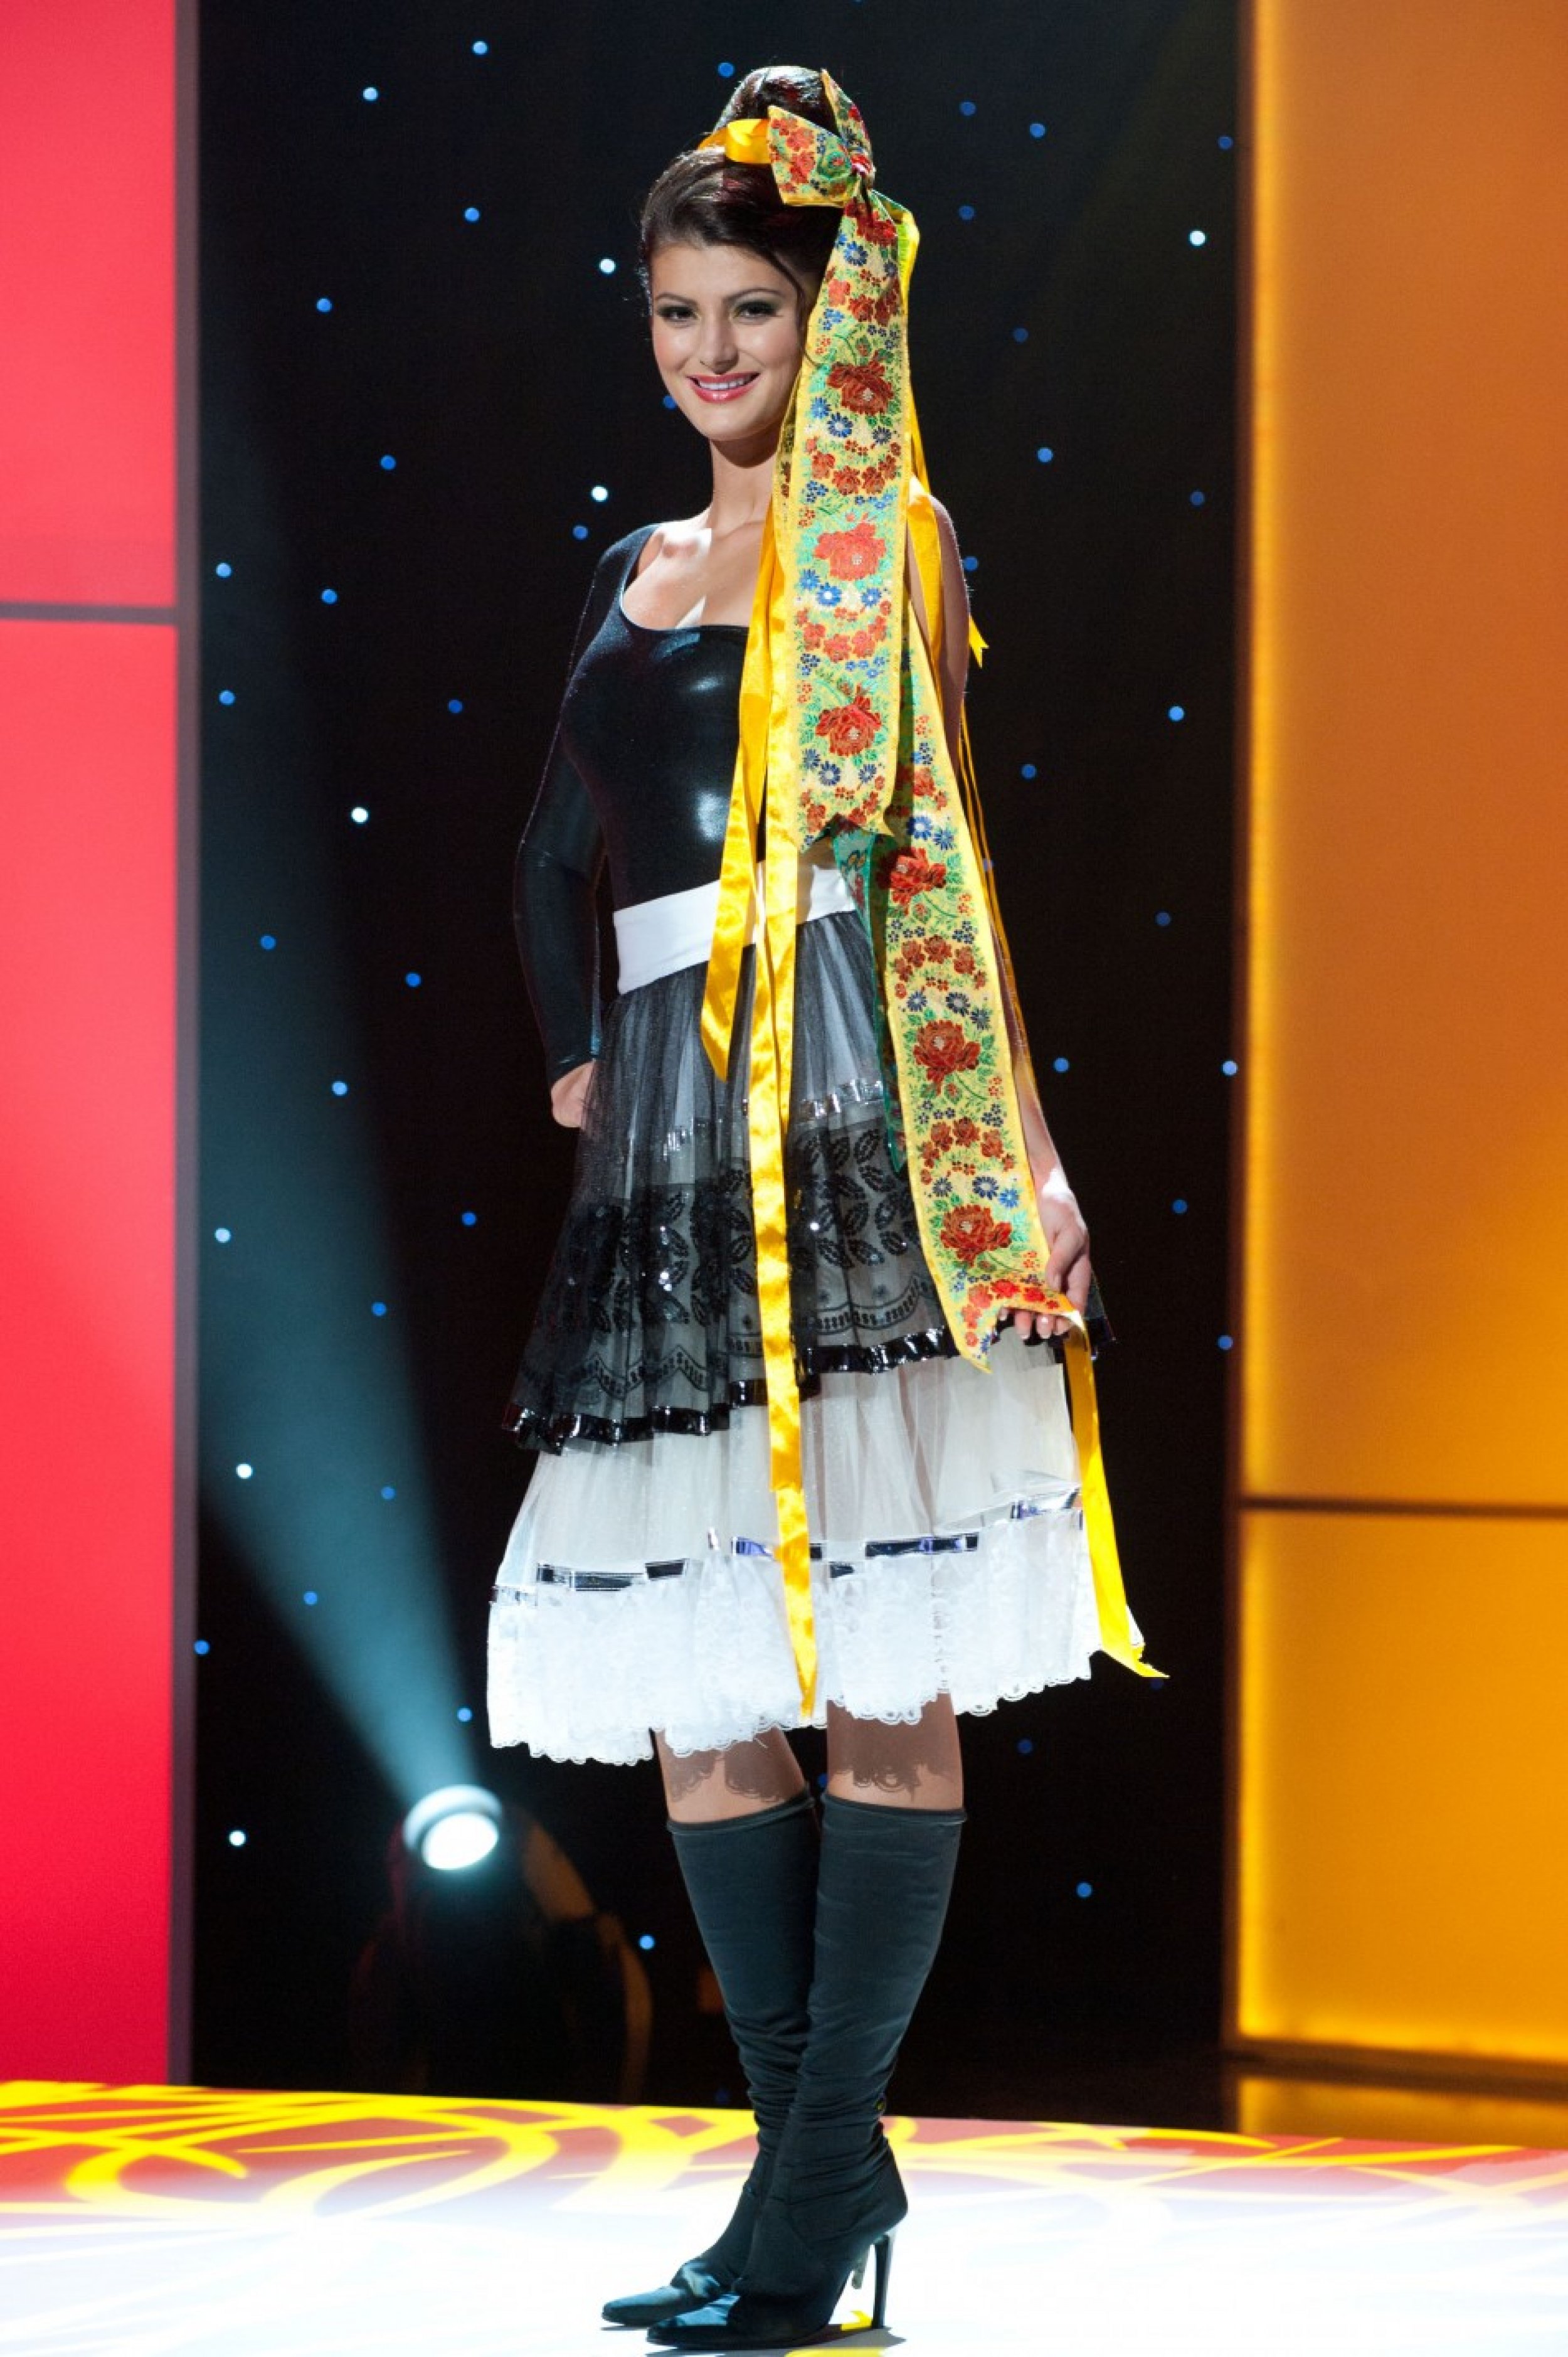 Miss Slovak Republic 2011